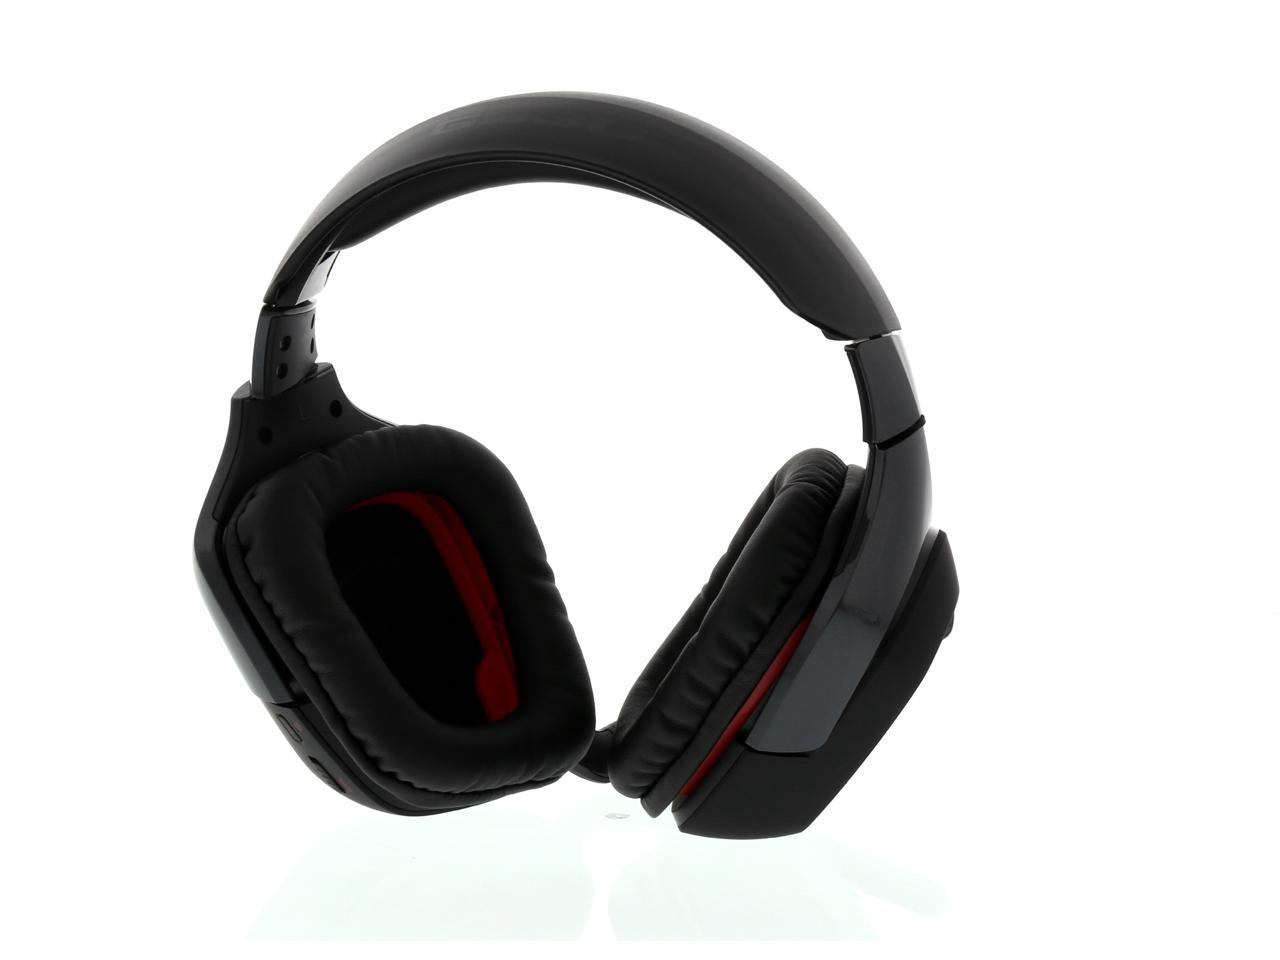 Logitech Gaming Headset G930 7.1 Wireless Headphones Newegg.com